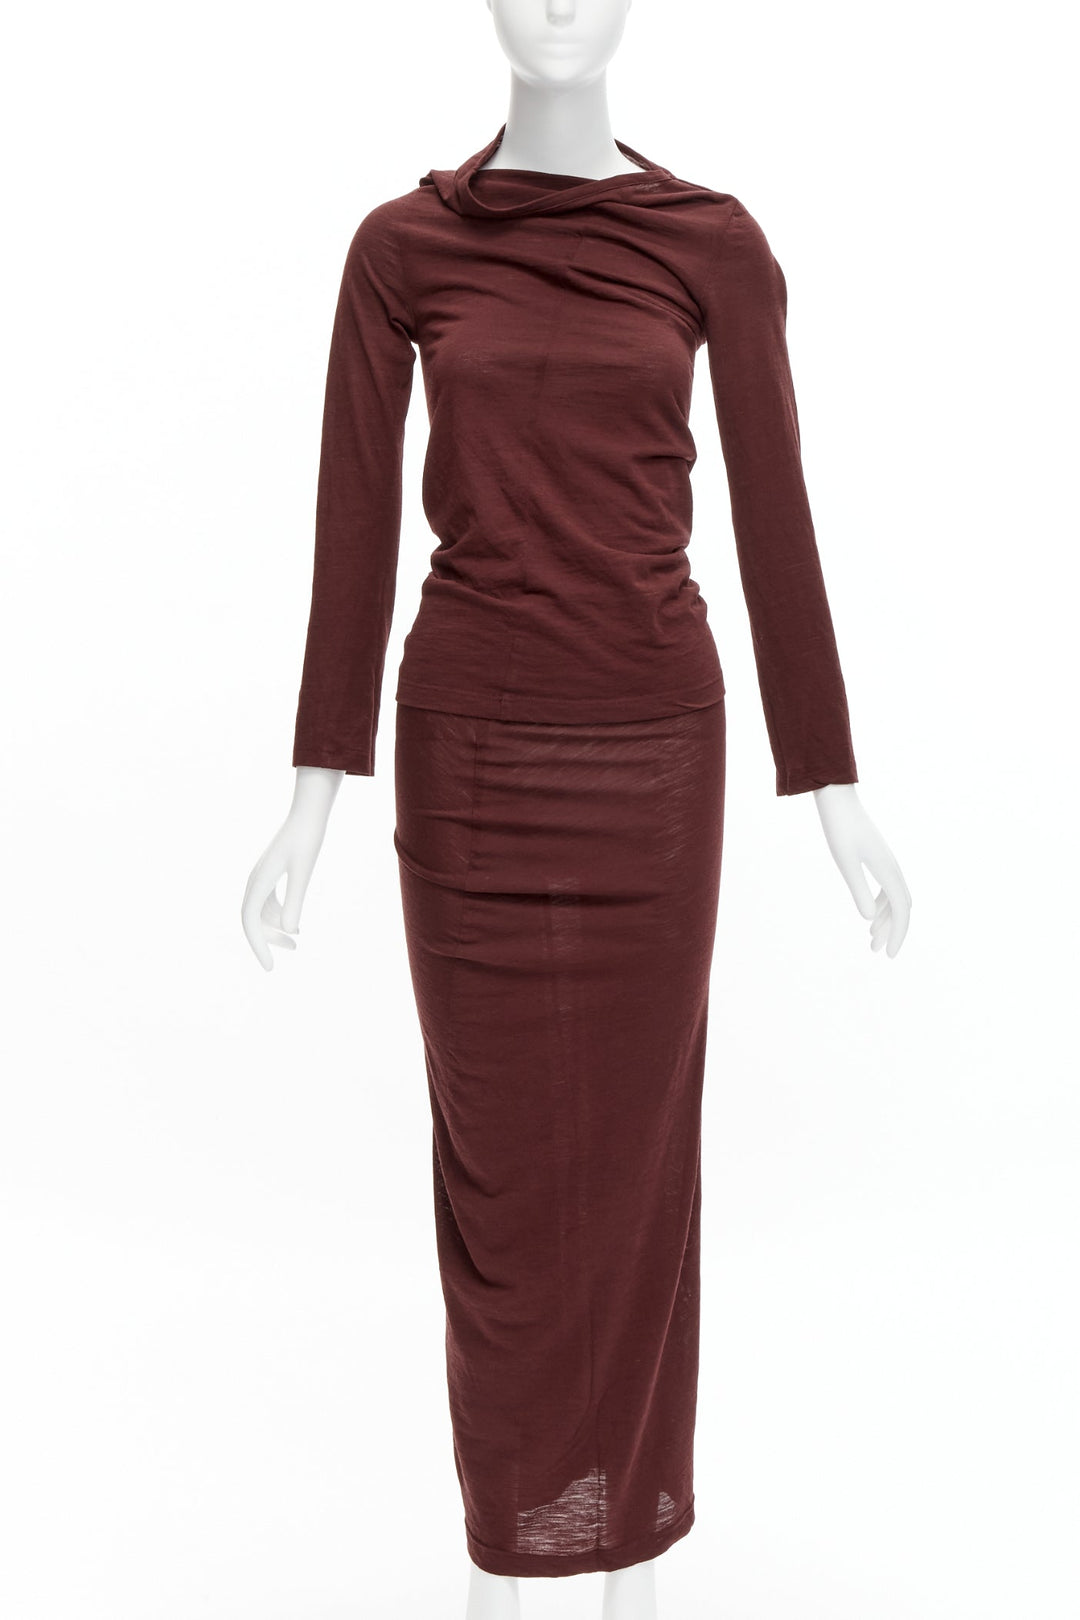 CDG COMME DES GARCONS burgundy brown bias cut stretch top midi skirt set S